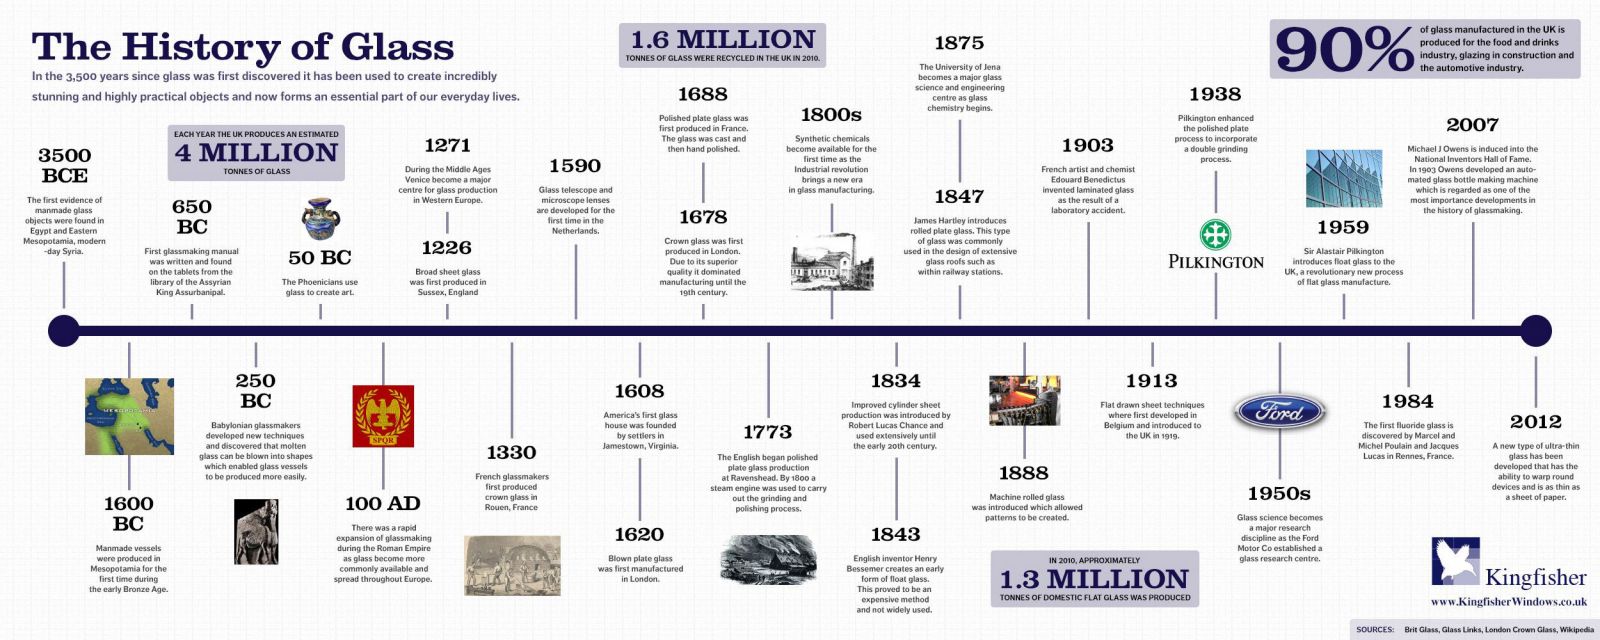 History Timeline of Glass